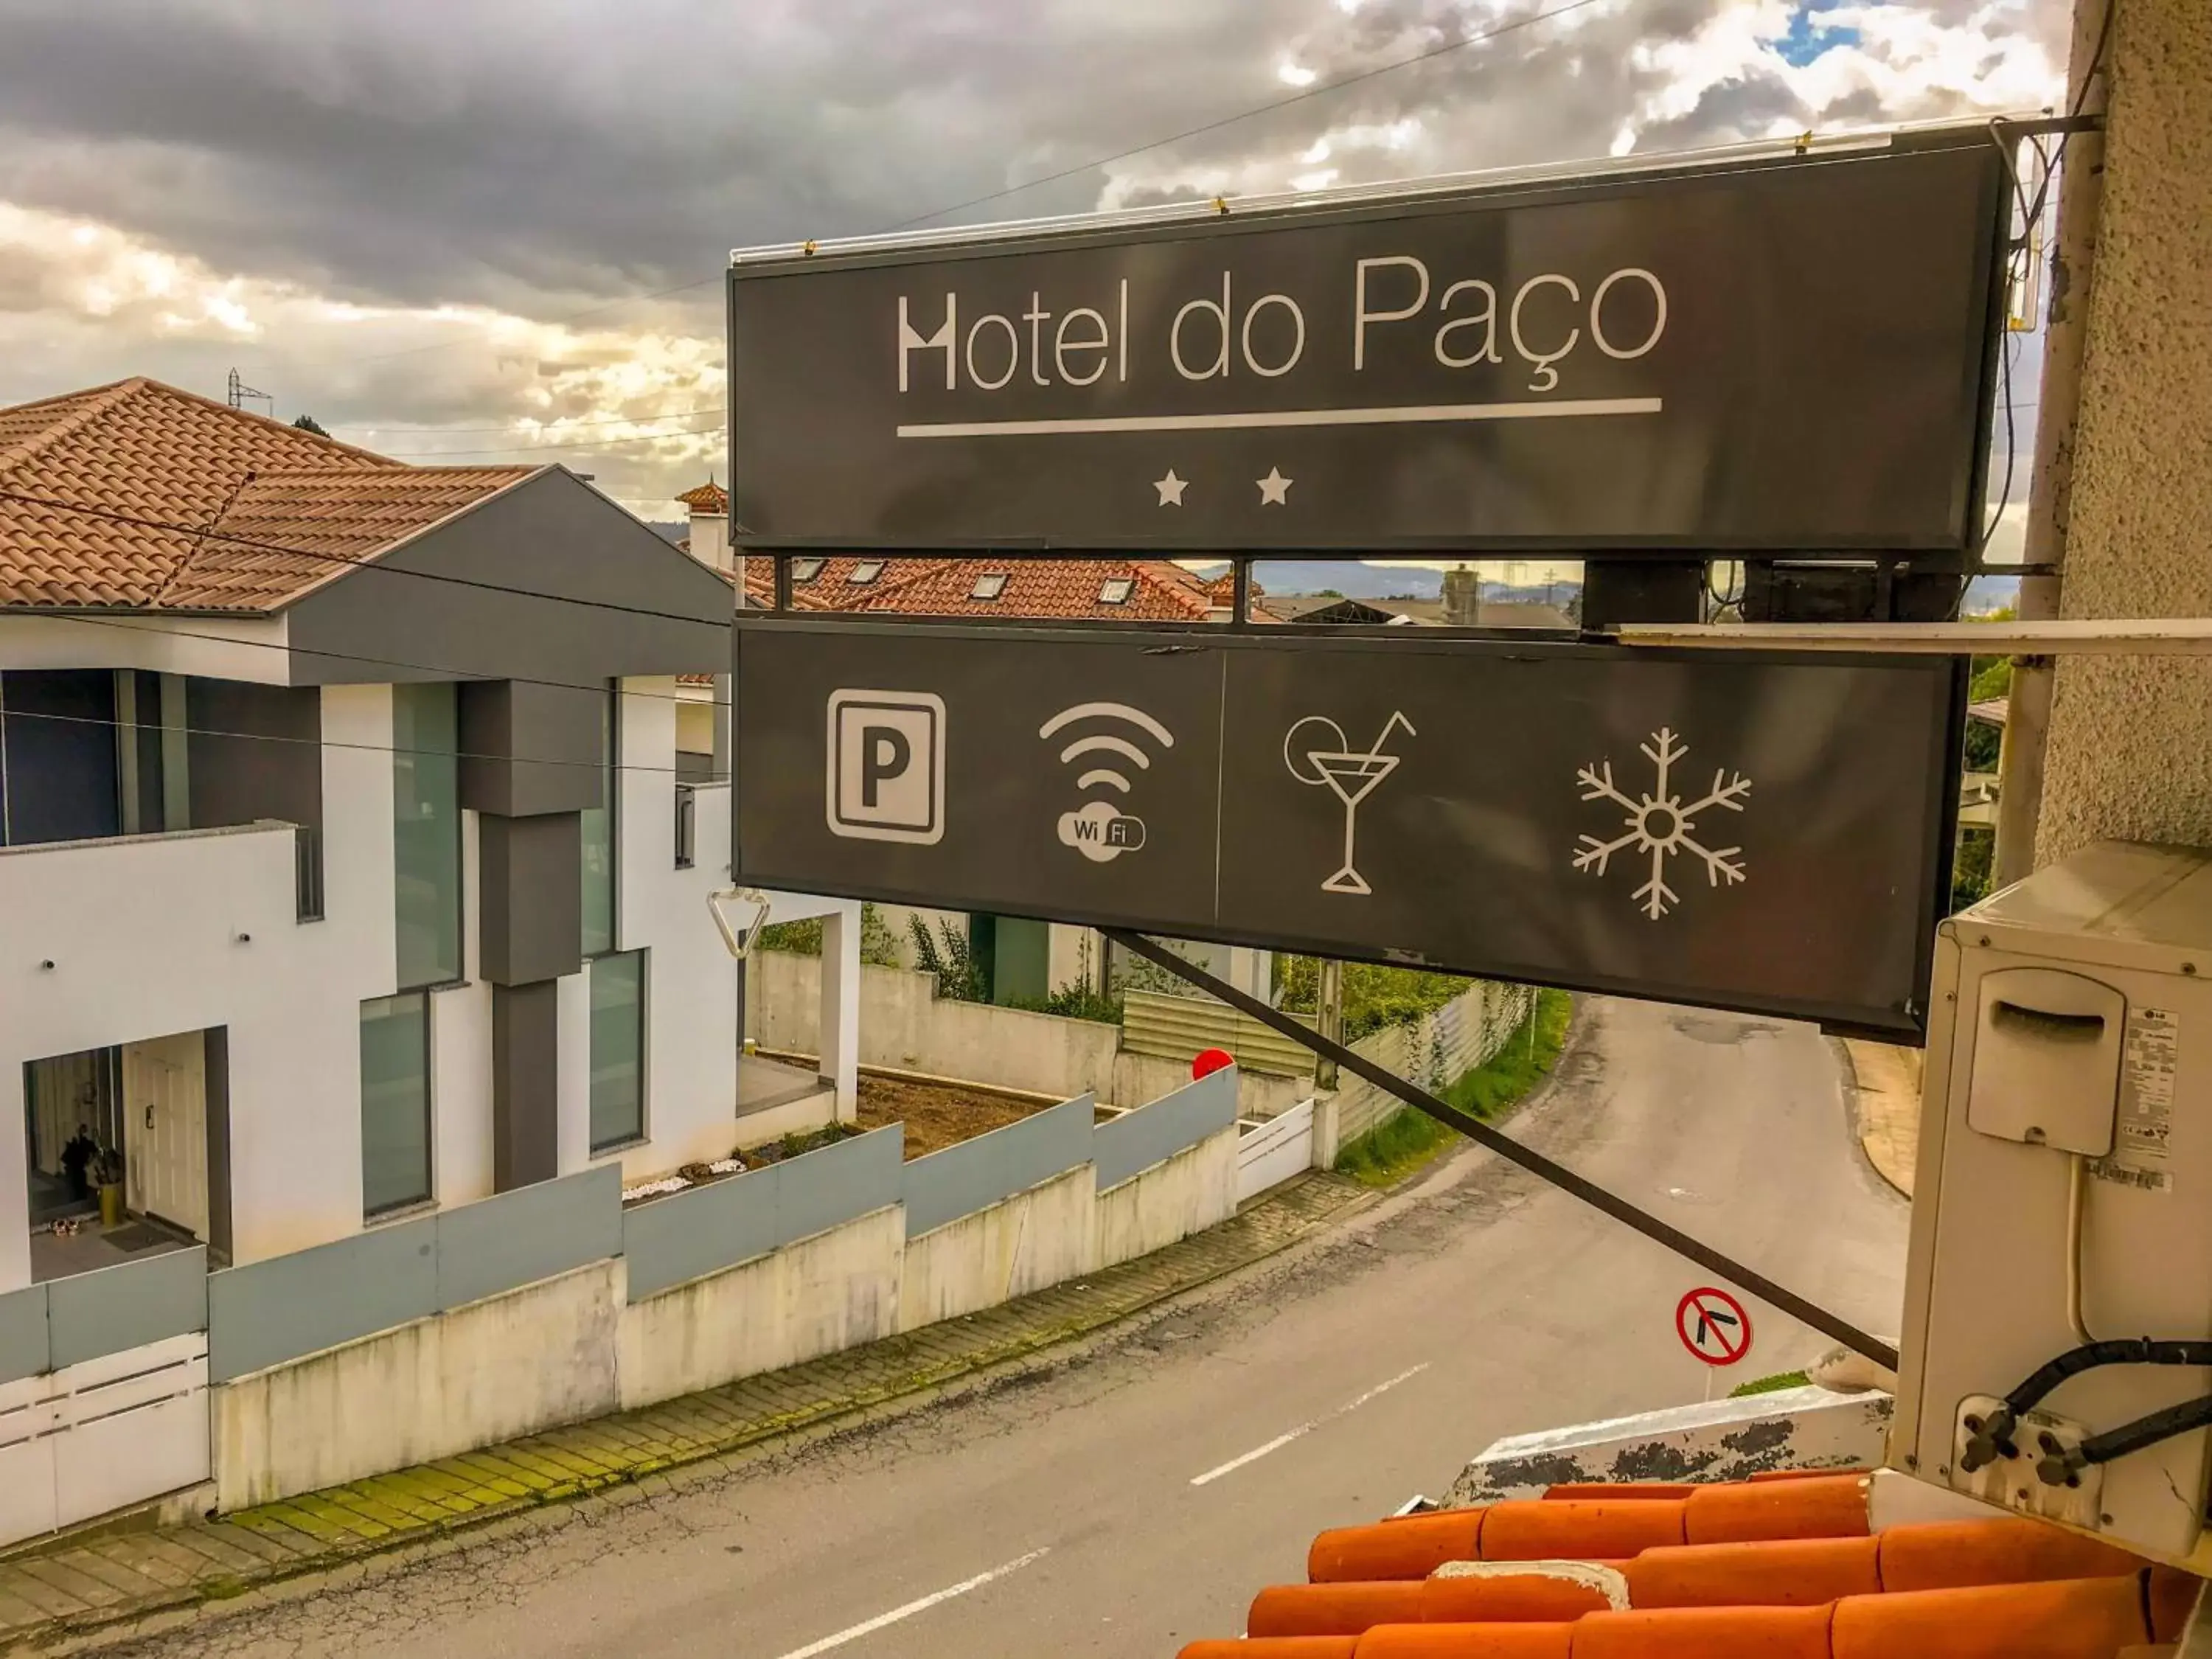 Property logo or sign in Hotel do Paço